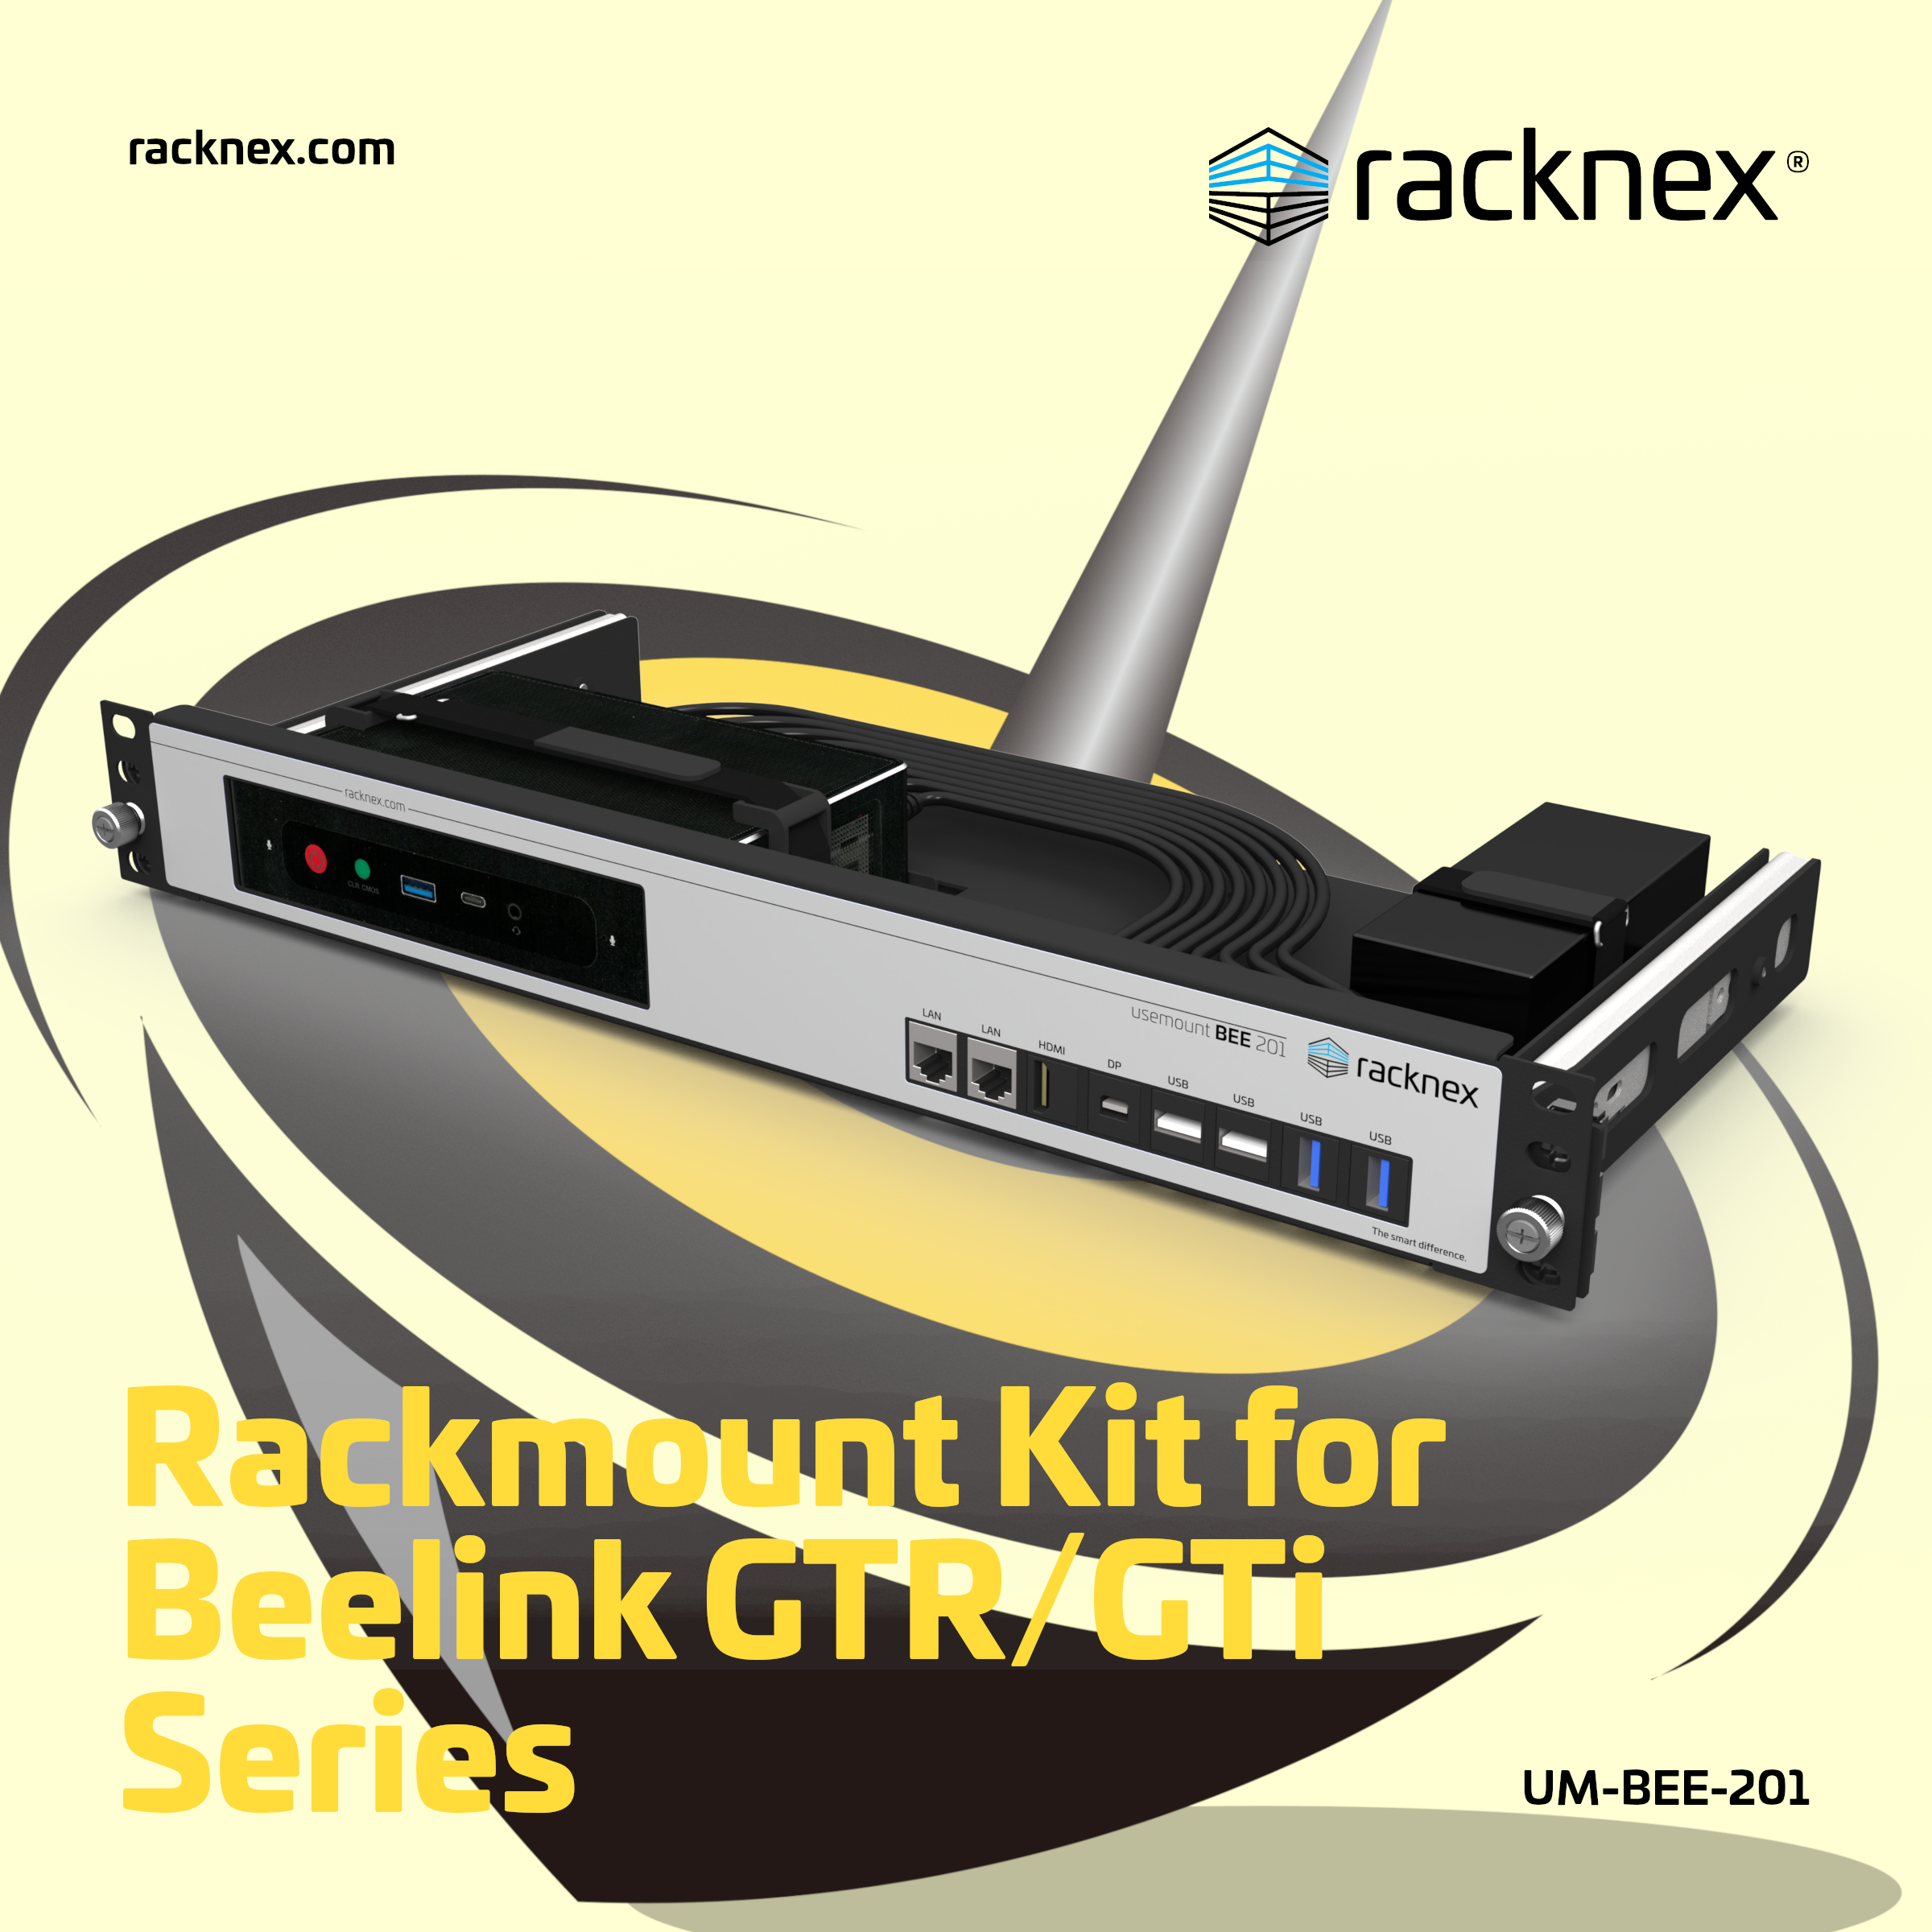 Beelink GTI/GTR Series rackmount kit